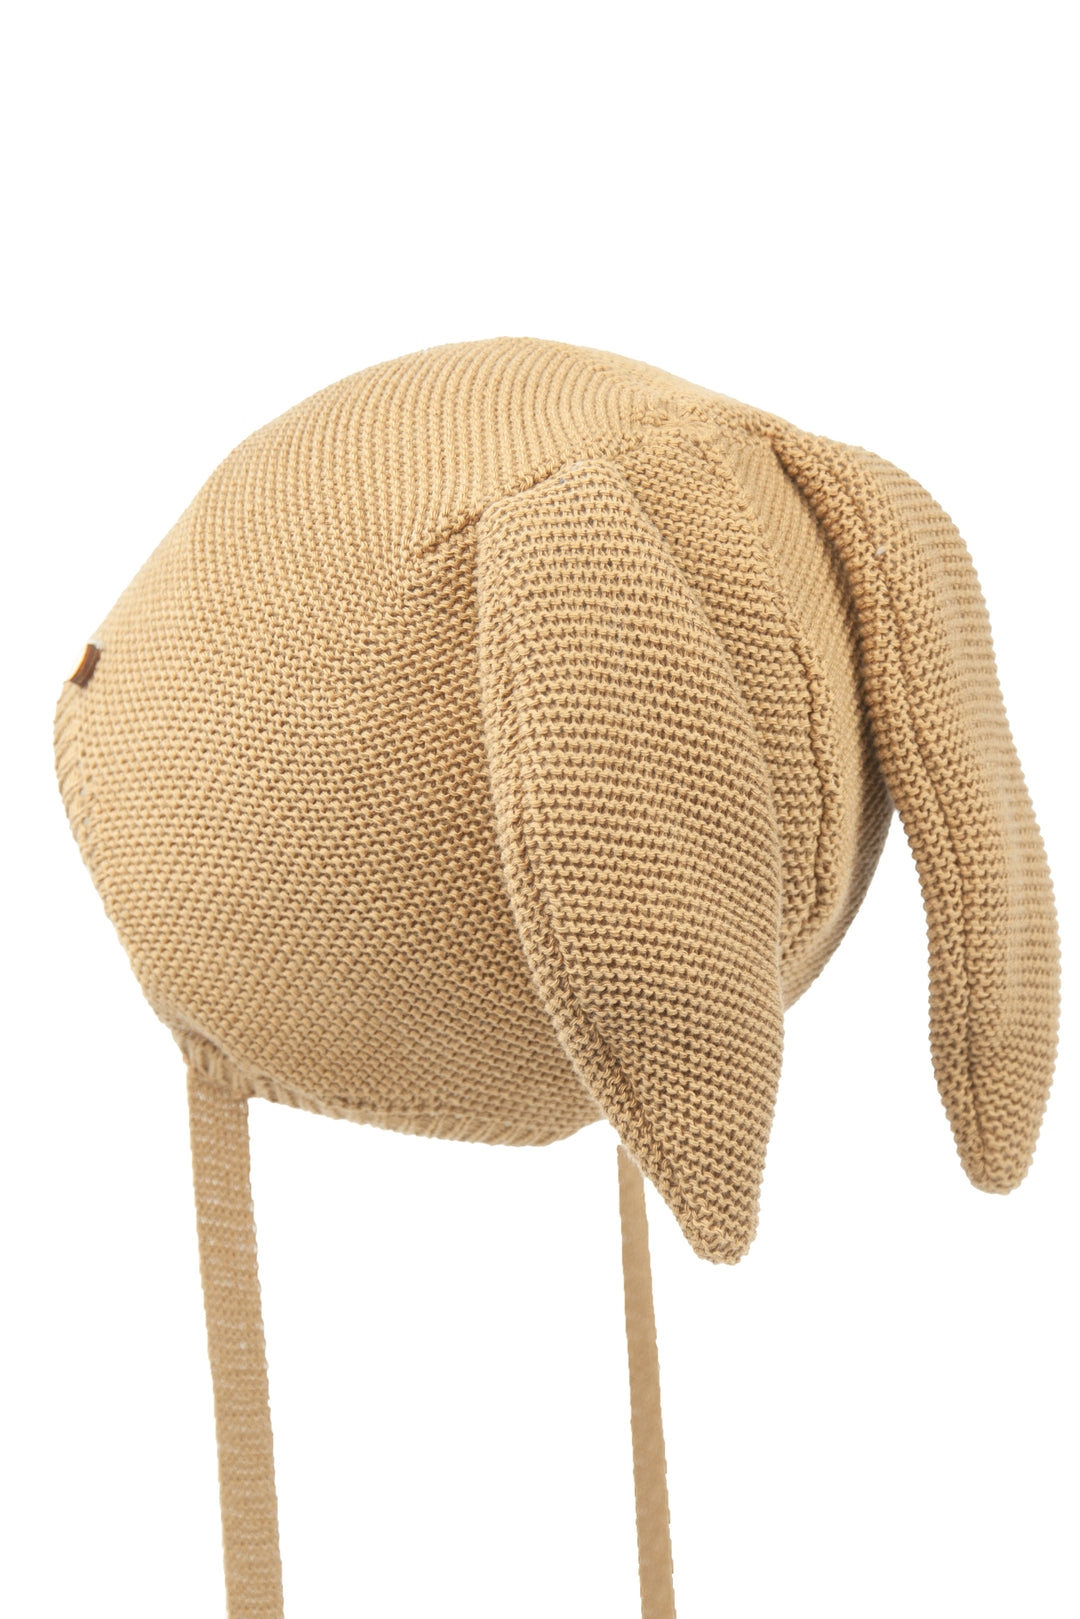 Jamiks "Bugs" Caramel Knit Bunny Hat | Millie and John